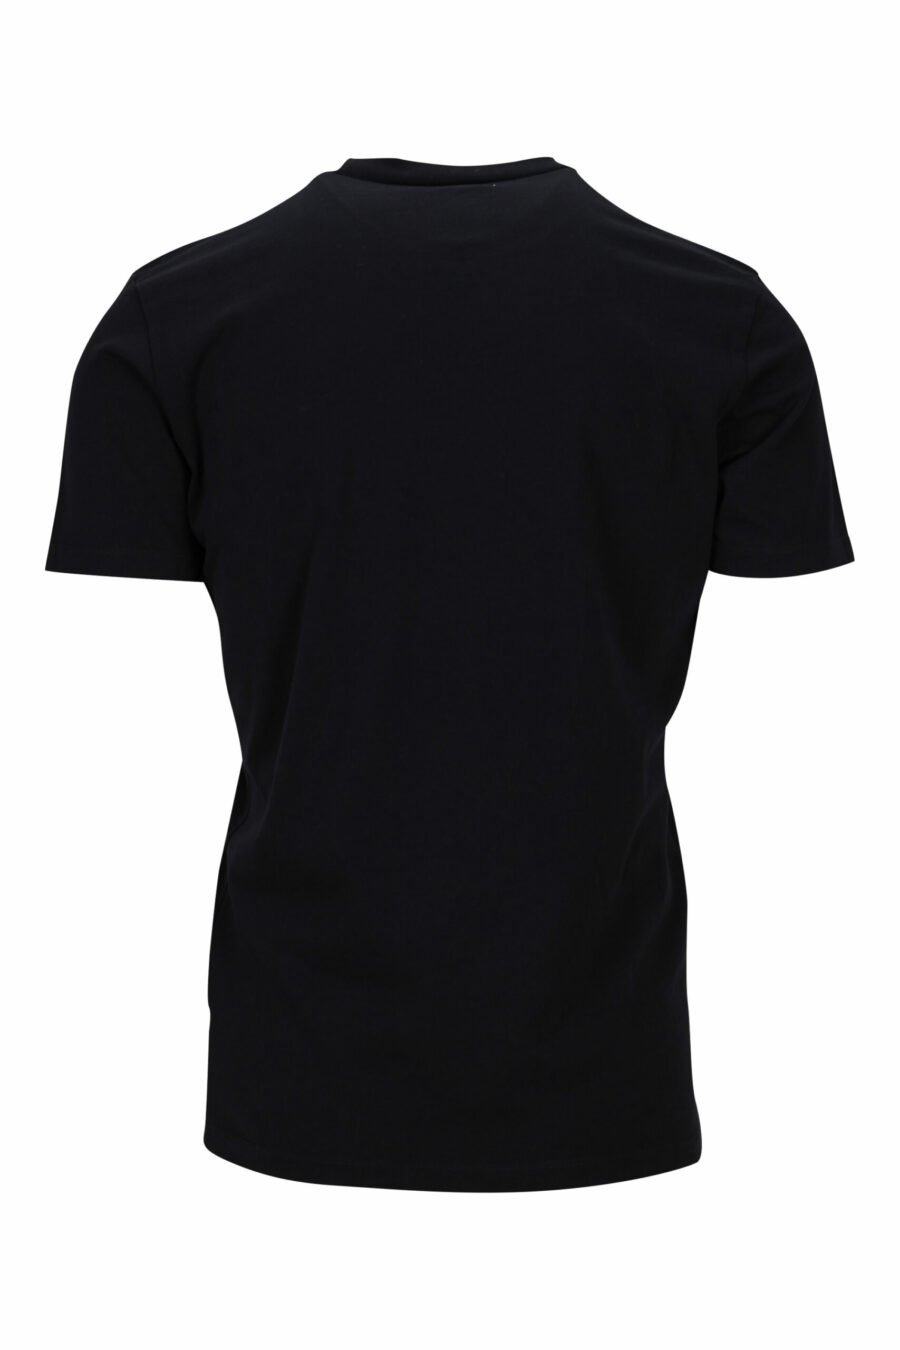 Black T-shirt with maxilogo "collegue league" - 8054148504700 1 scaled